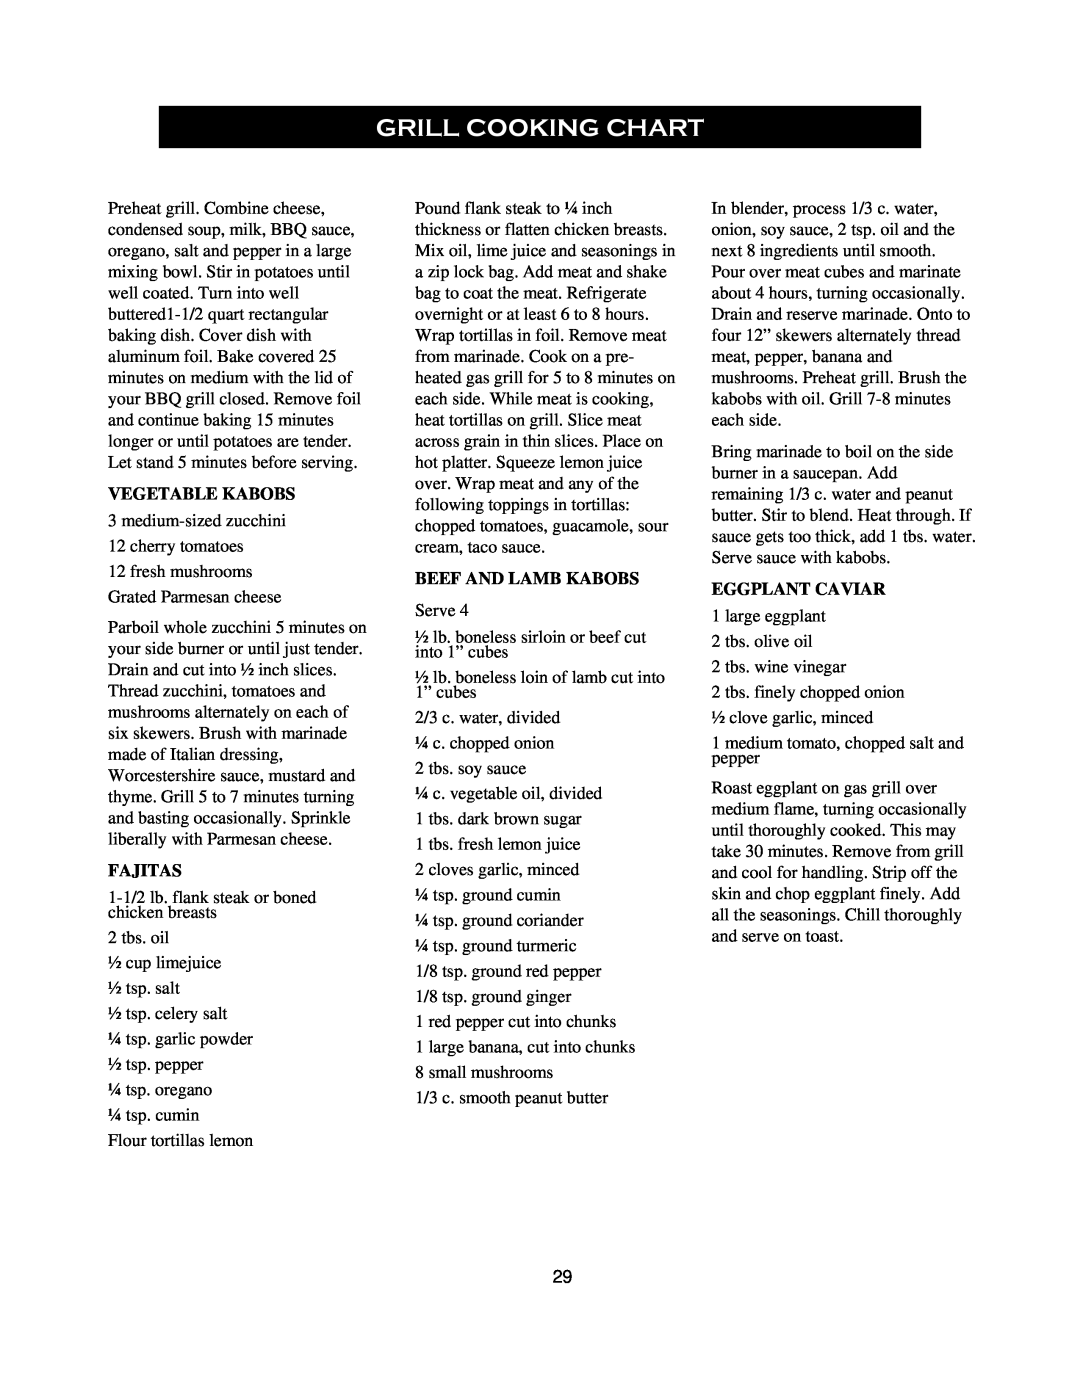 Nexgrill 720-0125-LP manual Grill Cooking Chart, Vegetable Kabobs, Fajitas, Beef And Lamb Kabobs, Eggplant Caviar 